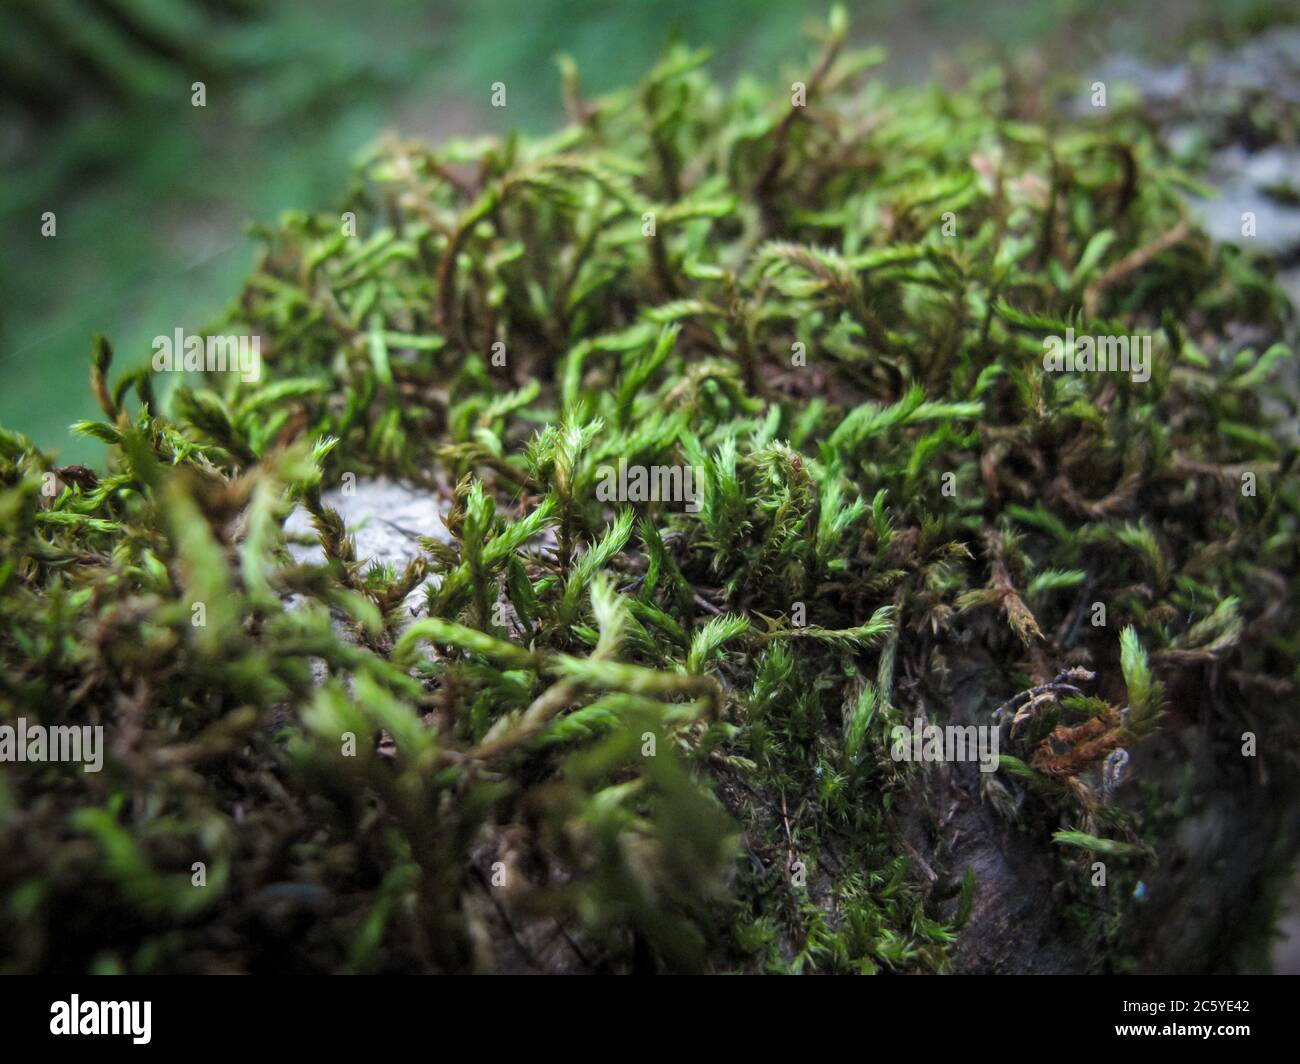 Sphagnum Moss, Sphagnum (living plant), Peat Moss (decayed plant